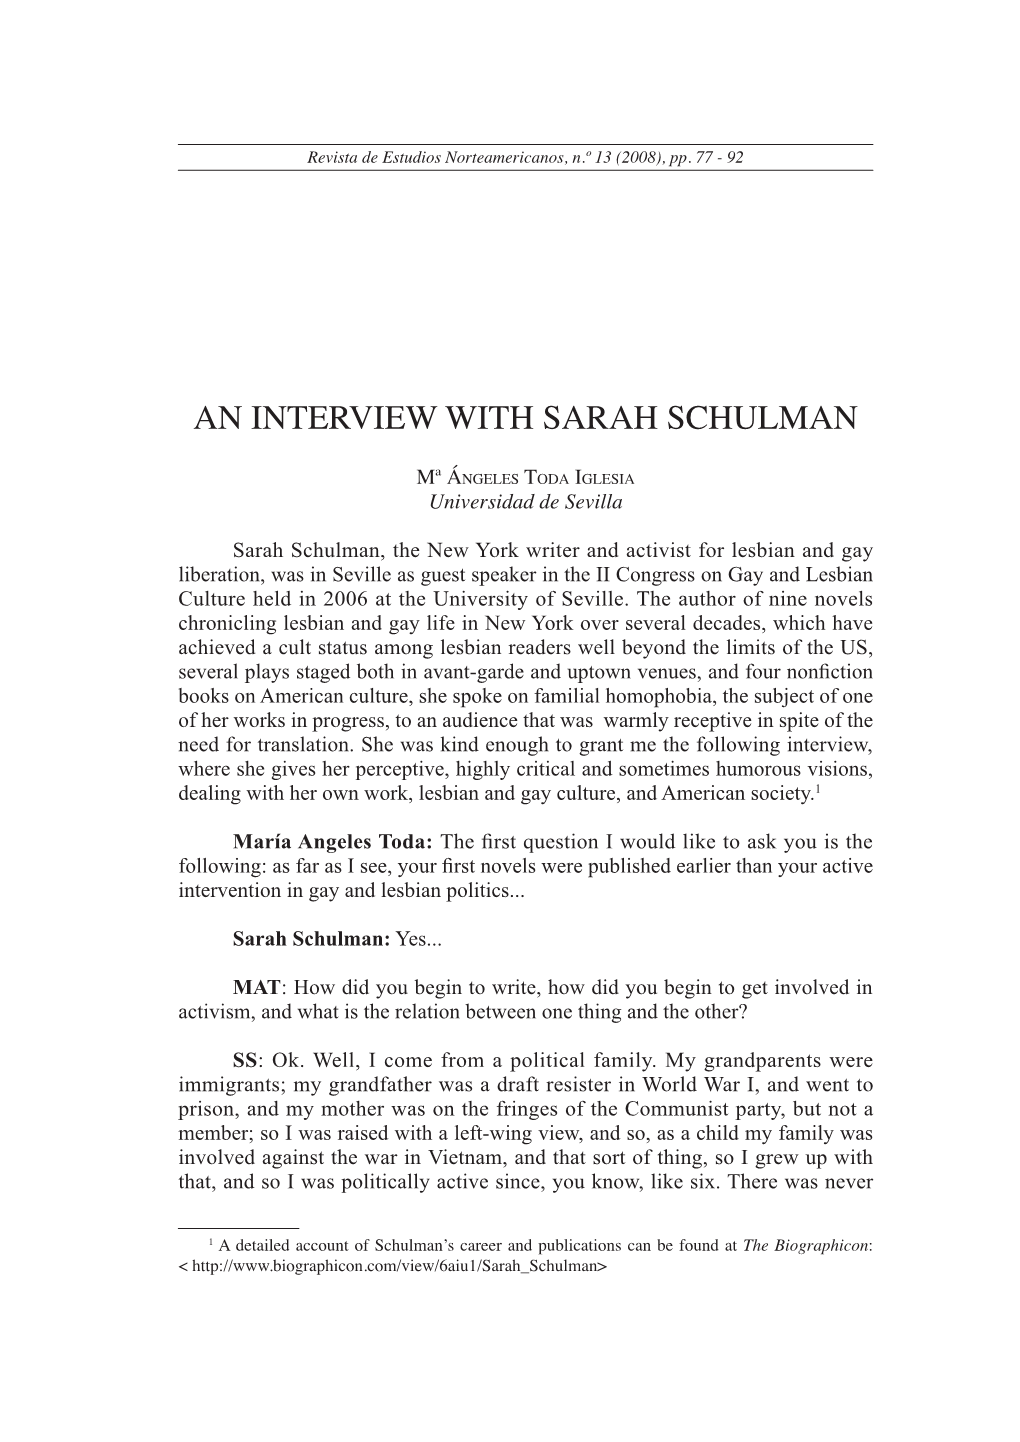 An Interview with Sarah Schulman